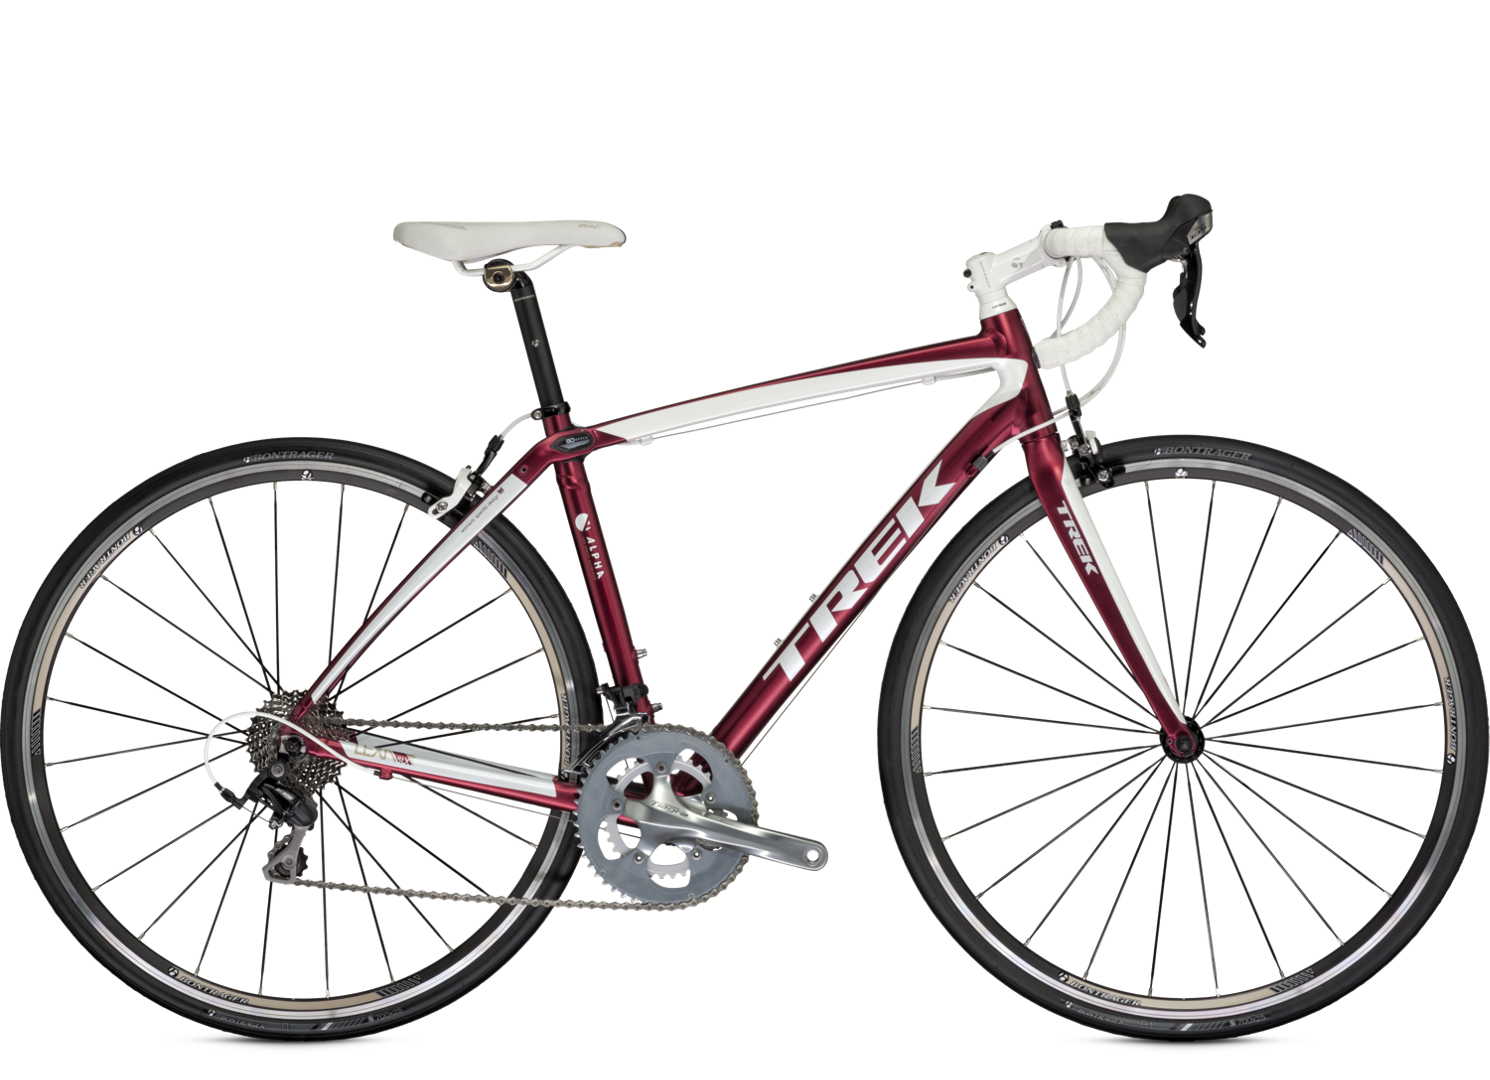 2013 Lexa SLX (Compact) - Bike Archive - Trek Bicycle